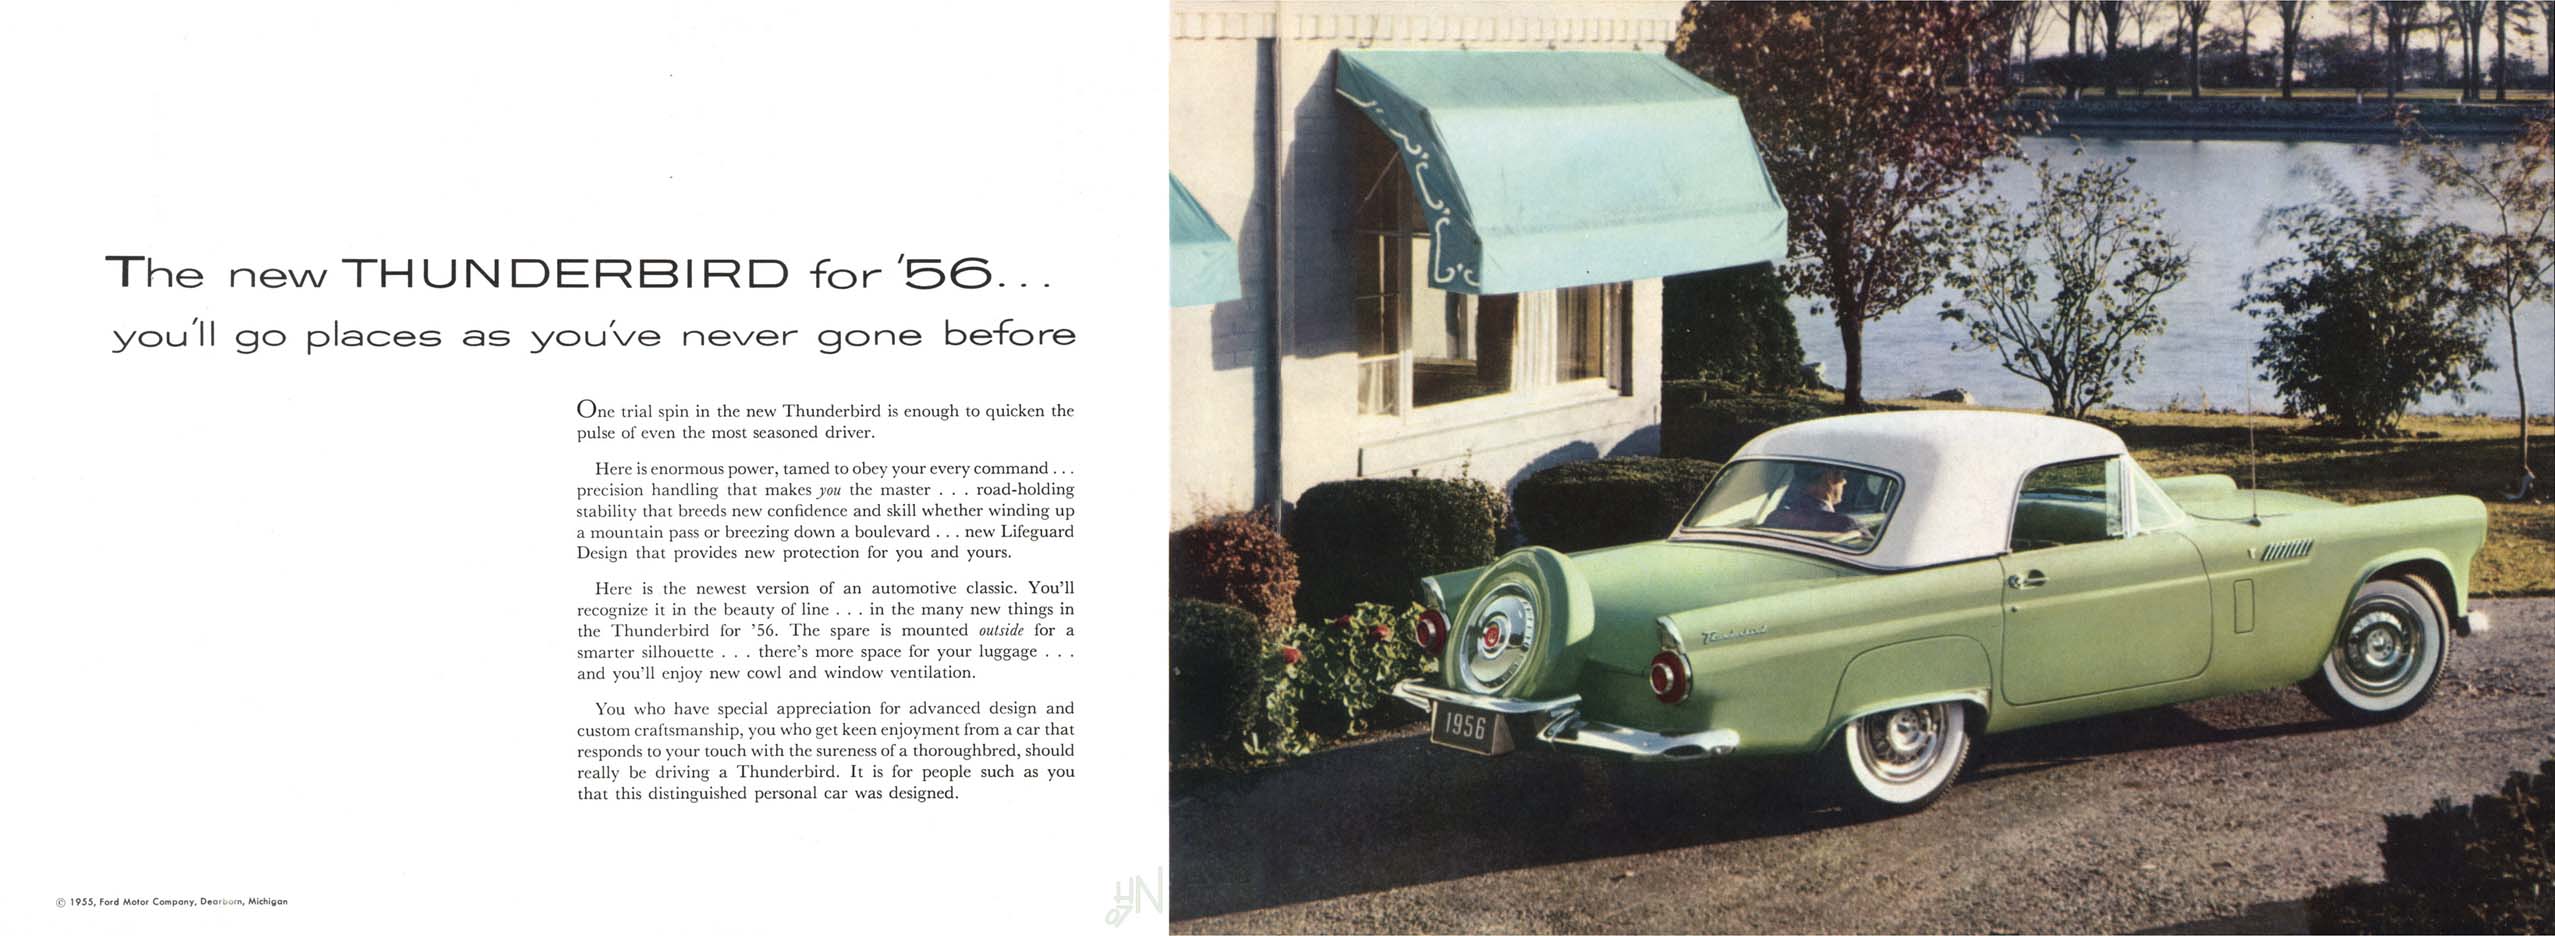 1956 Ford Thunderbird-02-03